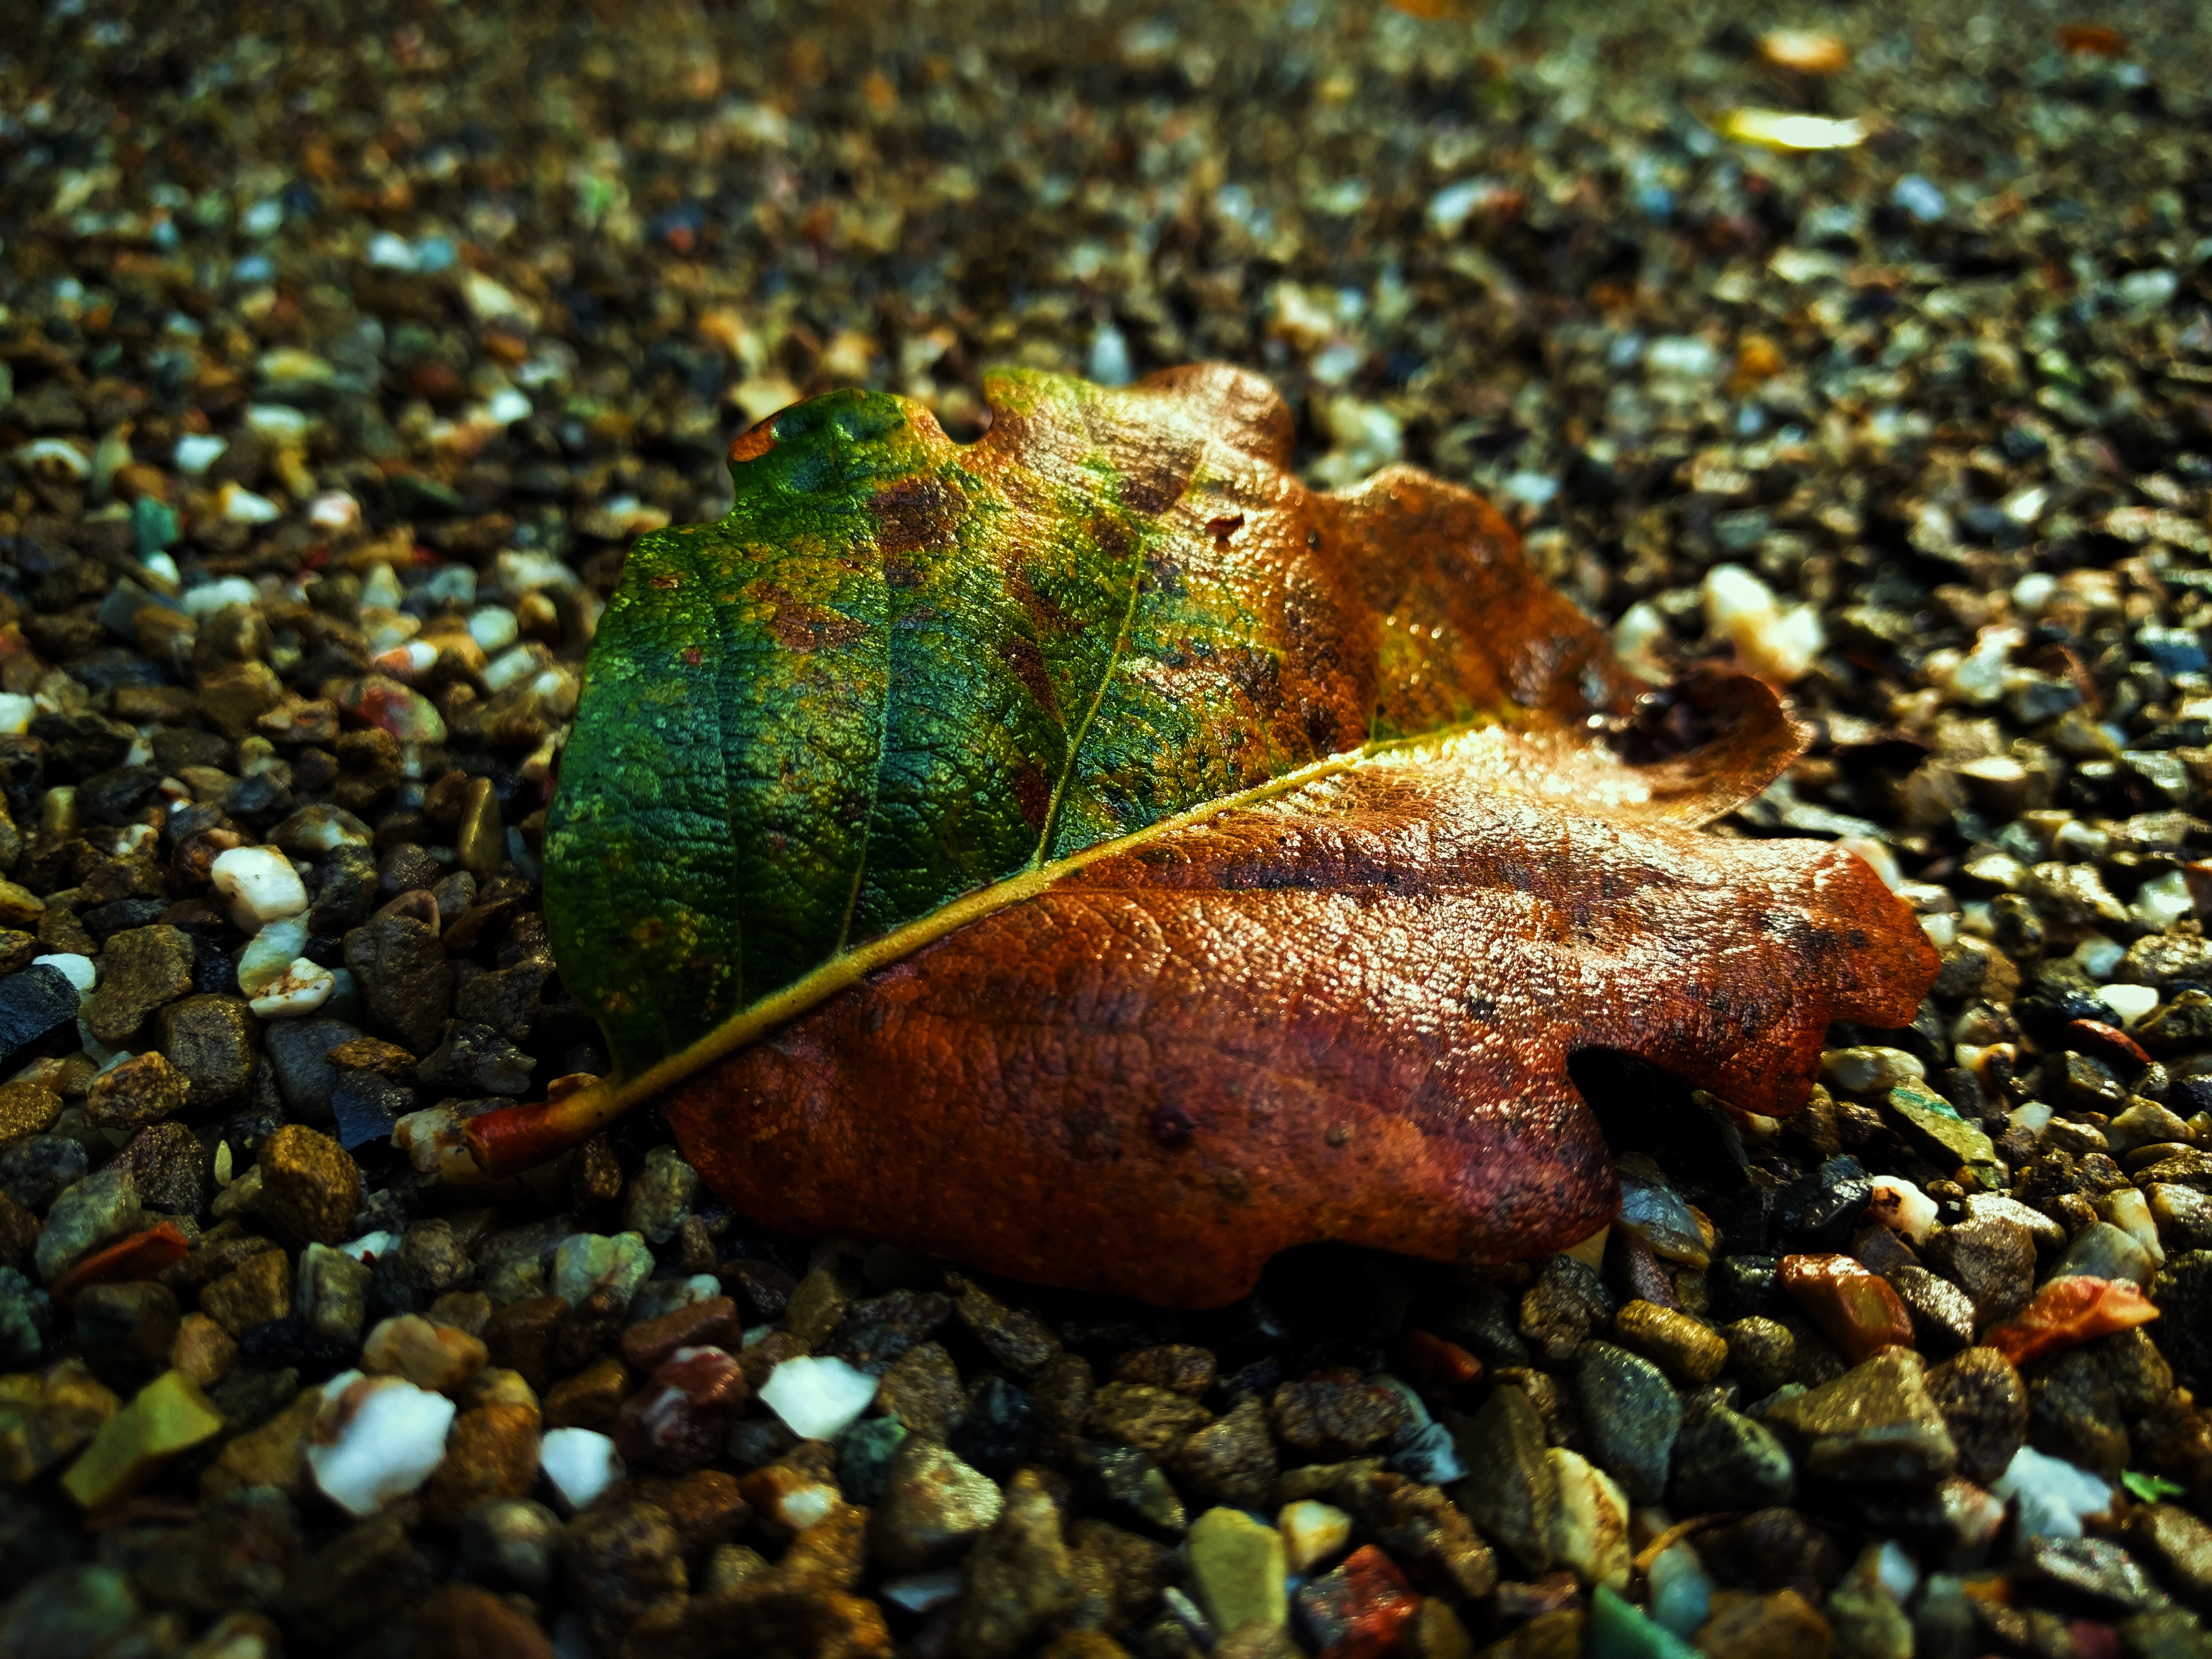 A dry fall leaf lies on a wet pebble